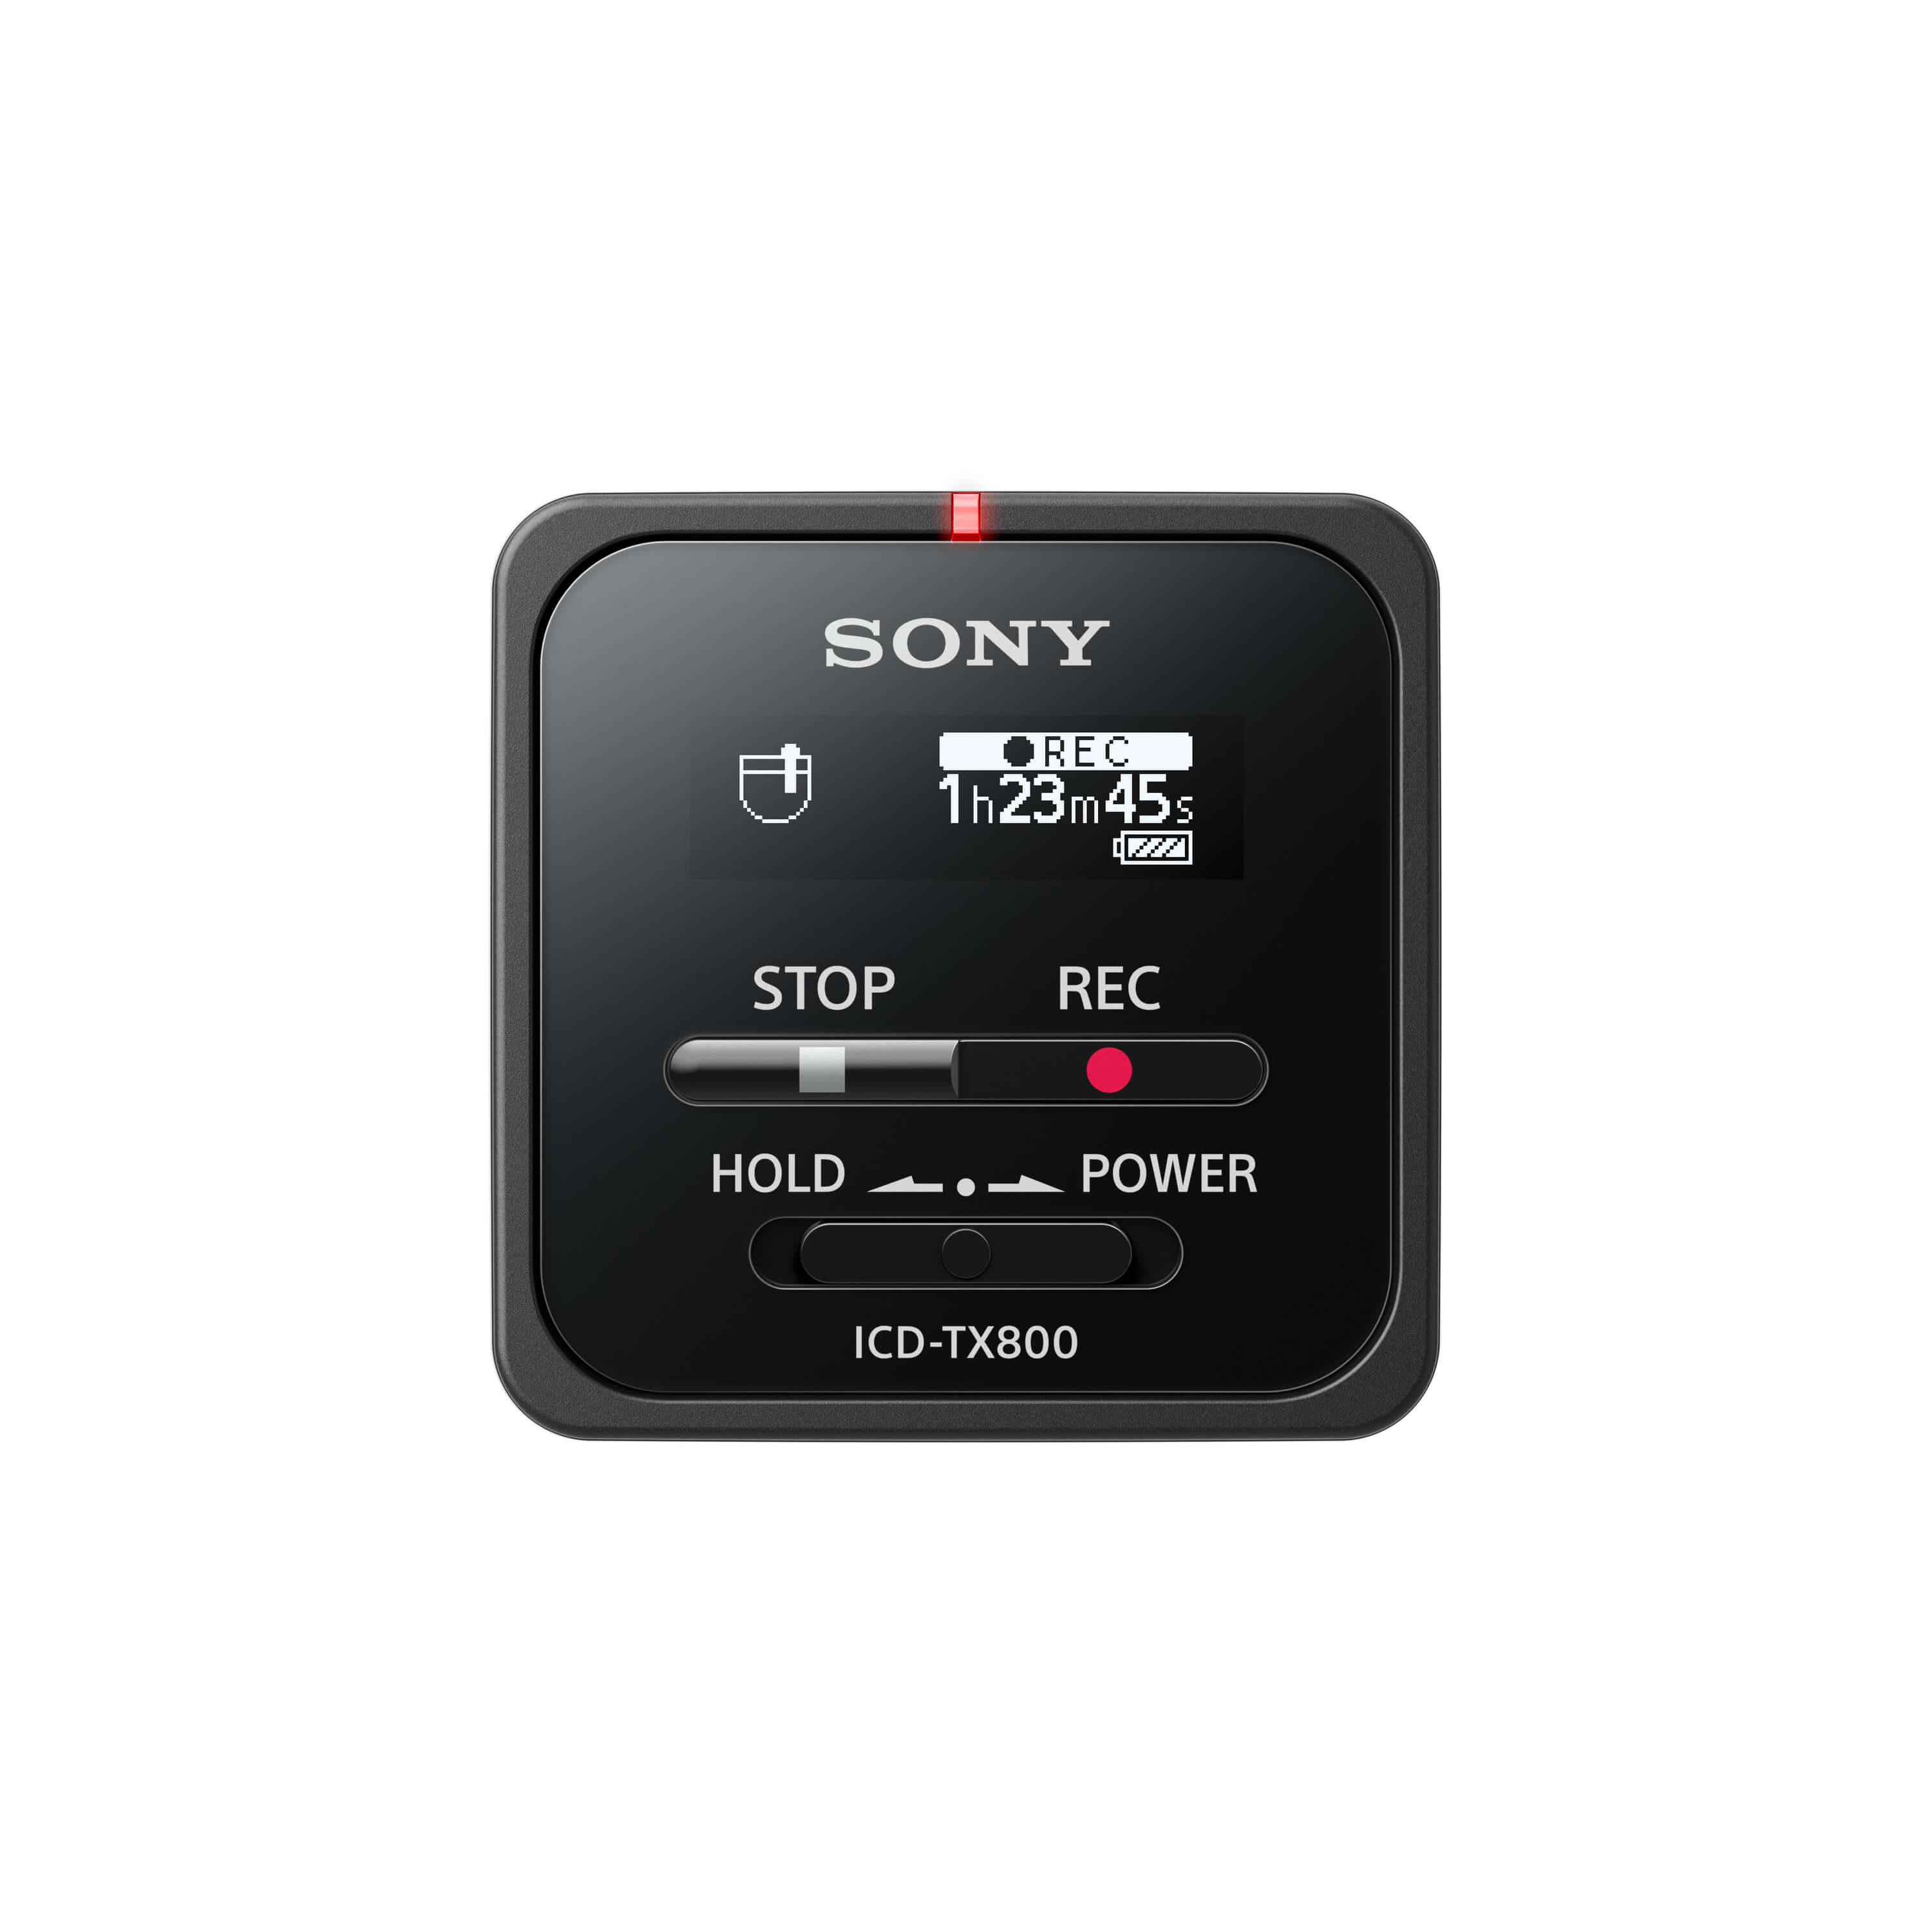 ICD-TX800 - 數位語音錄音筆- Sony 台灣官方購物網站- Sony Store 